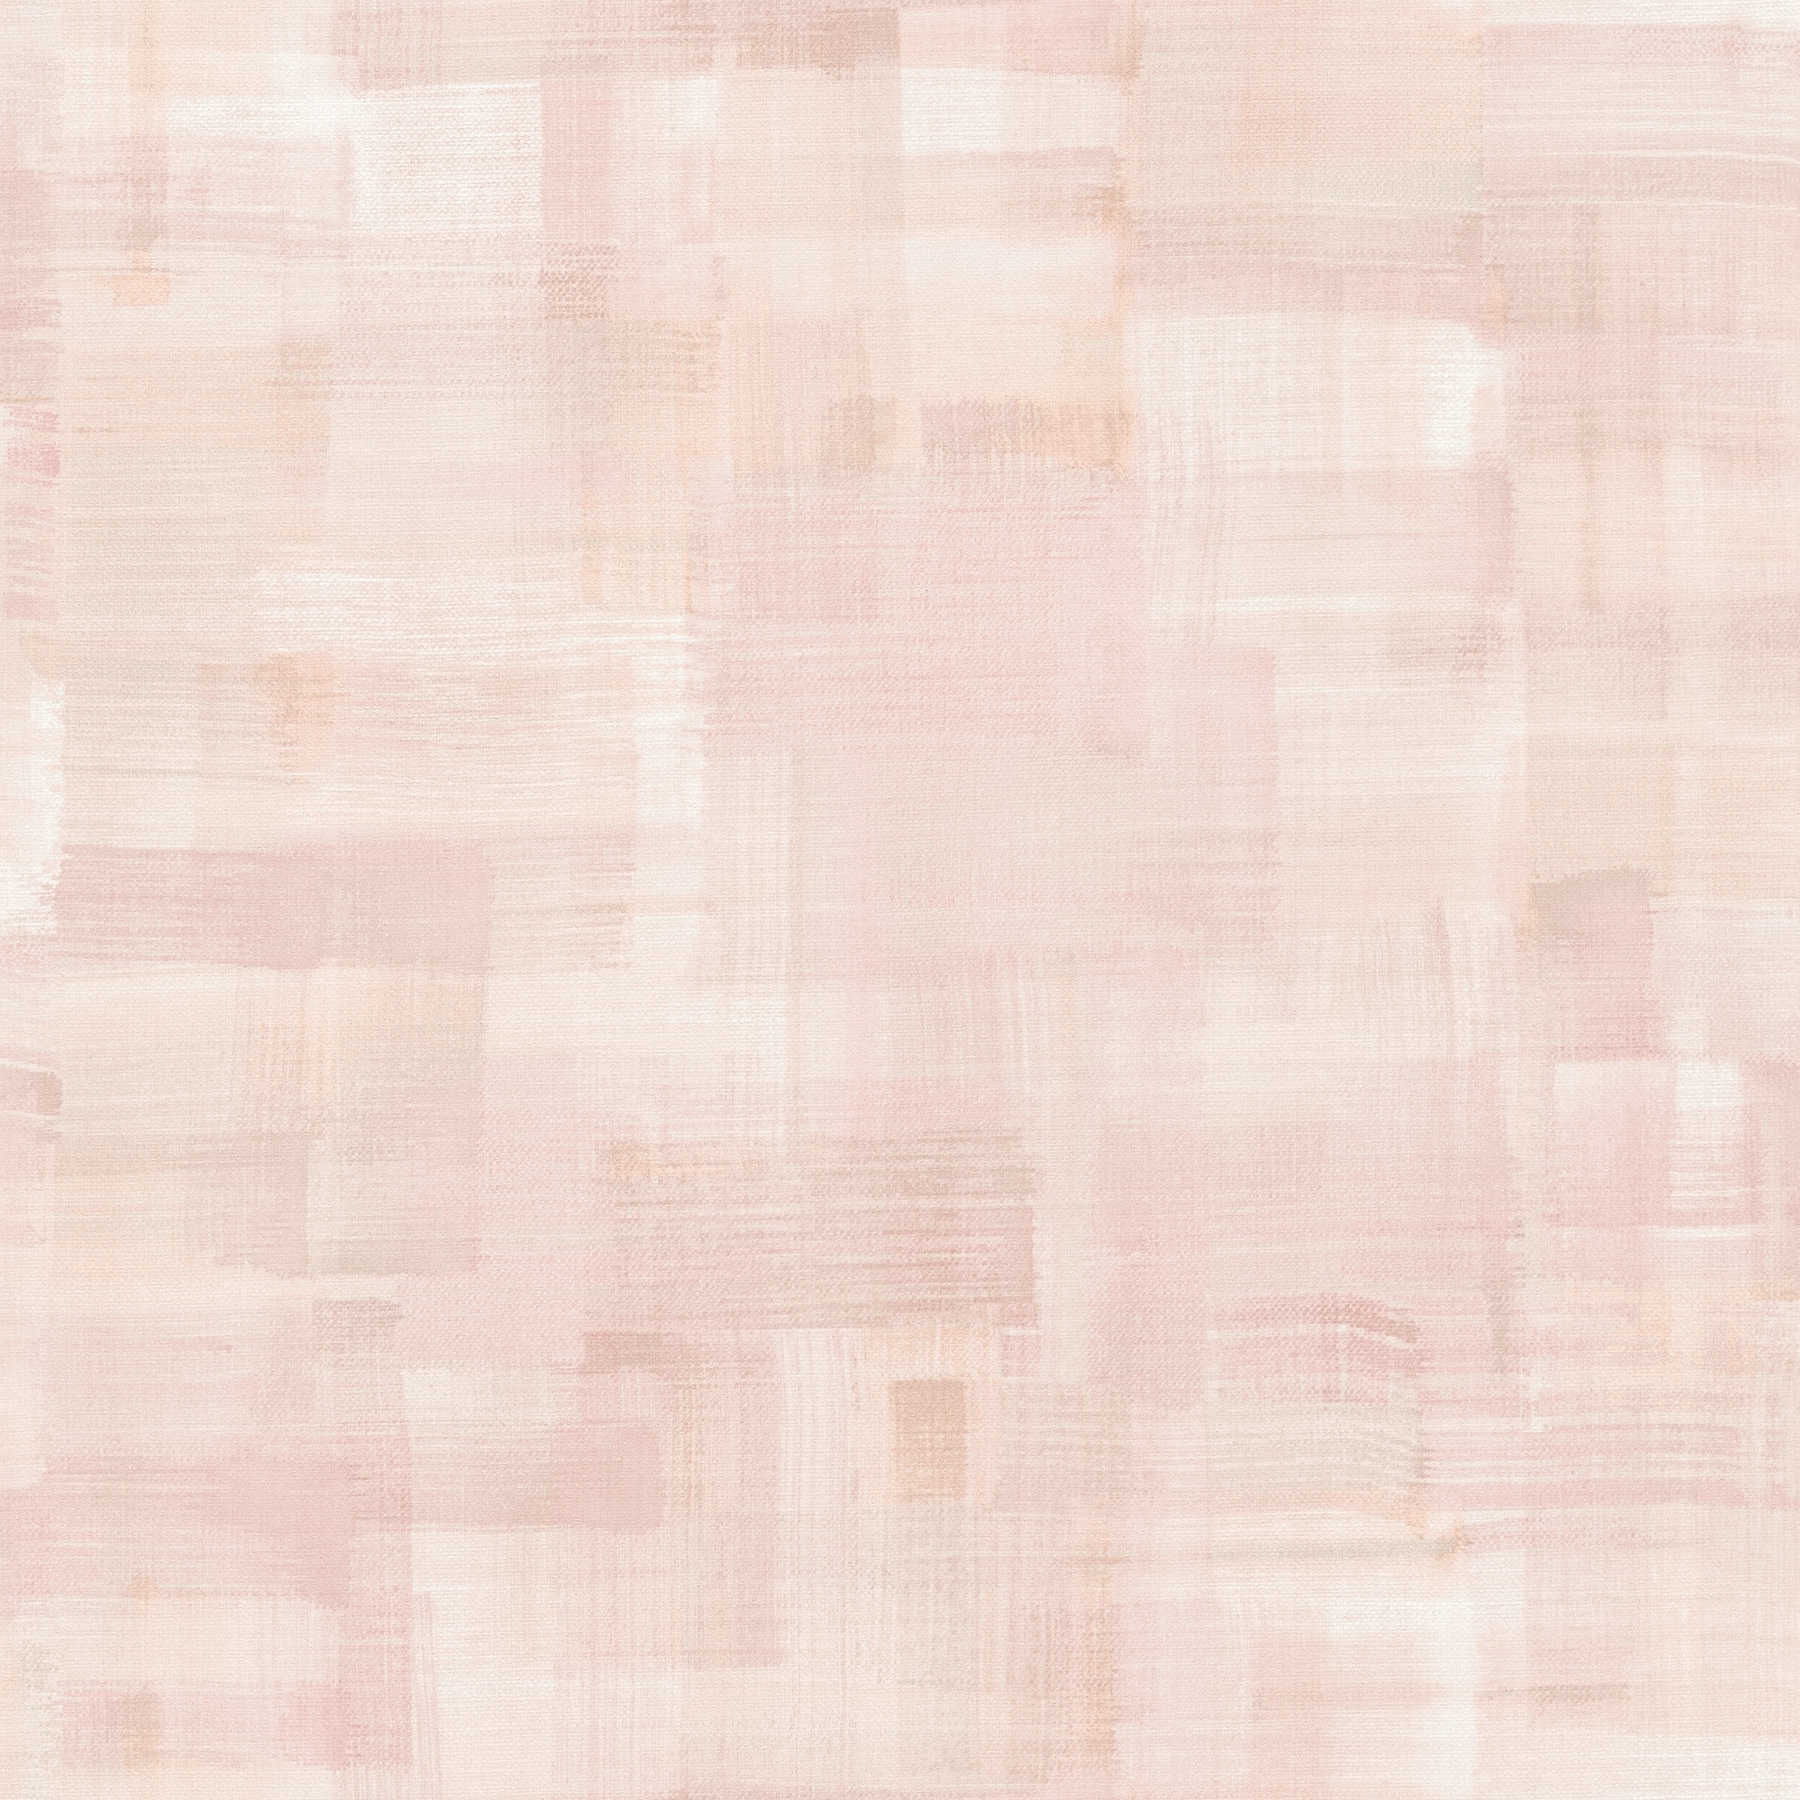 Lienzo de papel pintado Estructura, Tipo Moderno - Rosa, Beige
